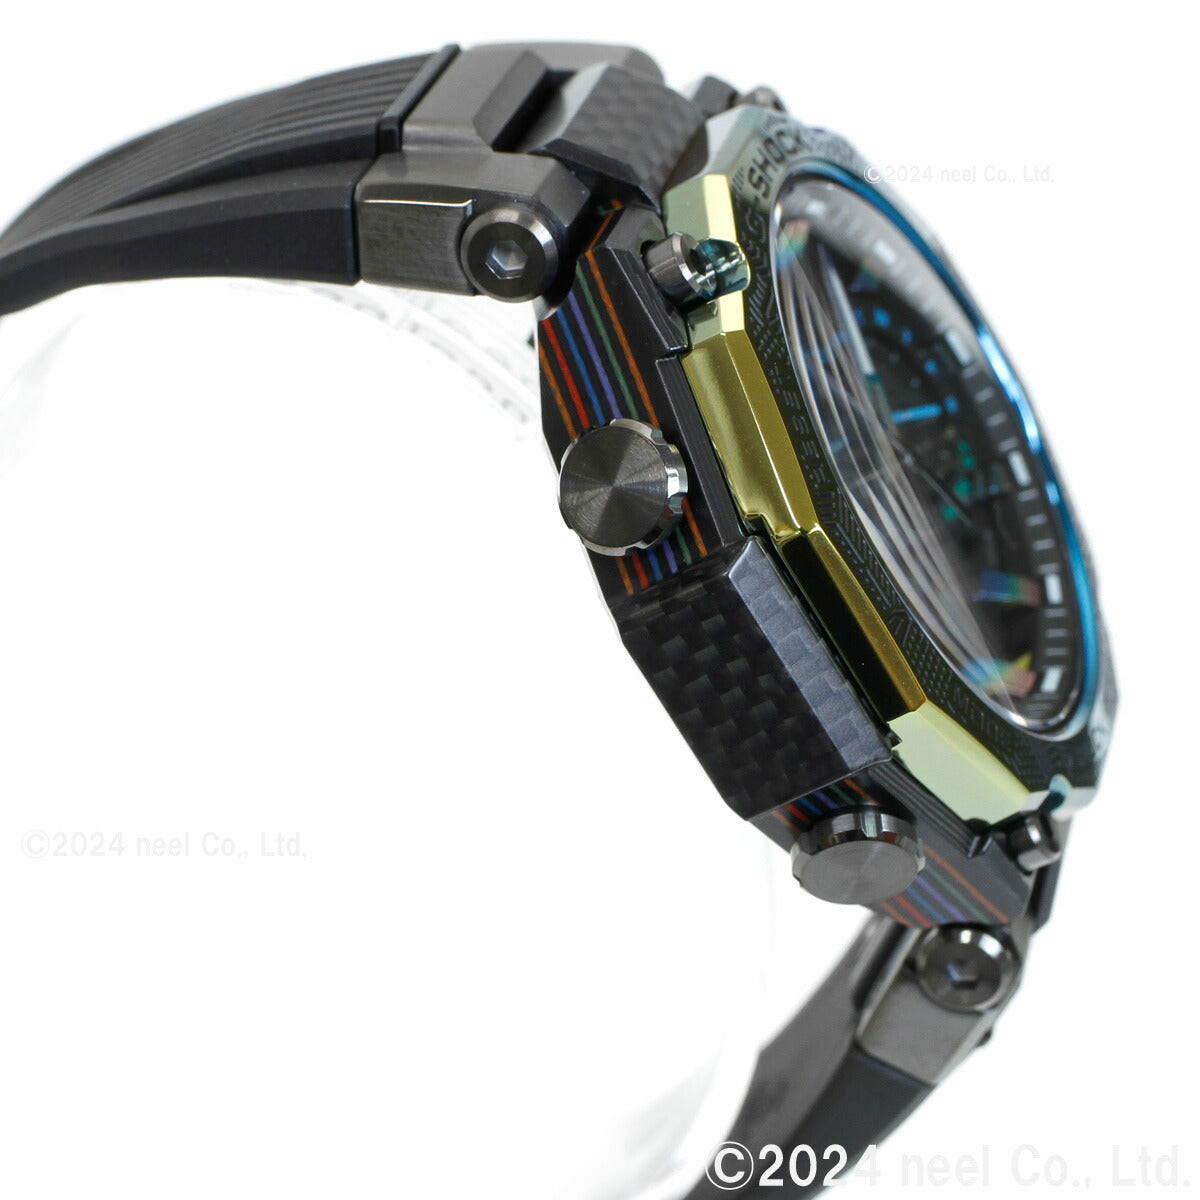 MT-G G-SHOCK 電波 ソーラー 電波時計 カシオ Gショック CASIO 限定モデル 腕時計 メンズ スマートフォンリンク タフソーラー MTG-B2000YR-1AJR